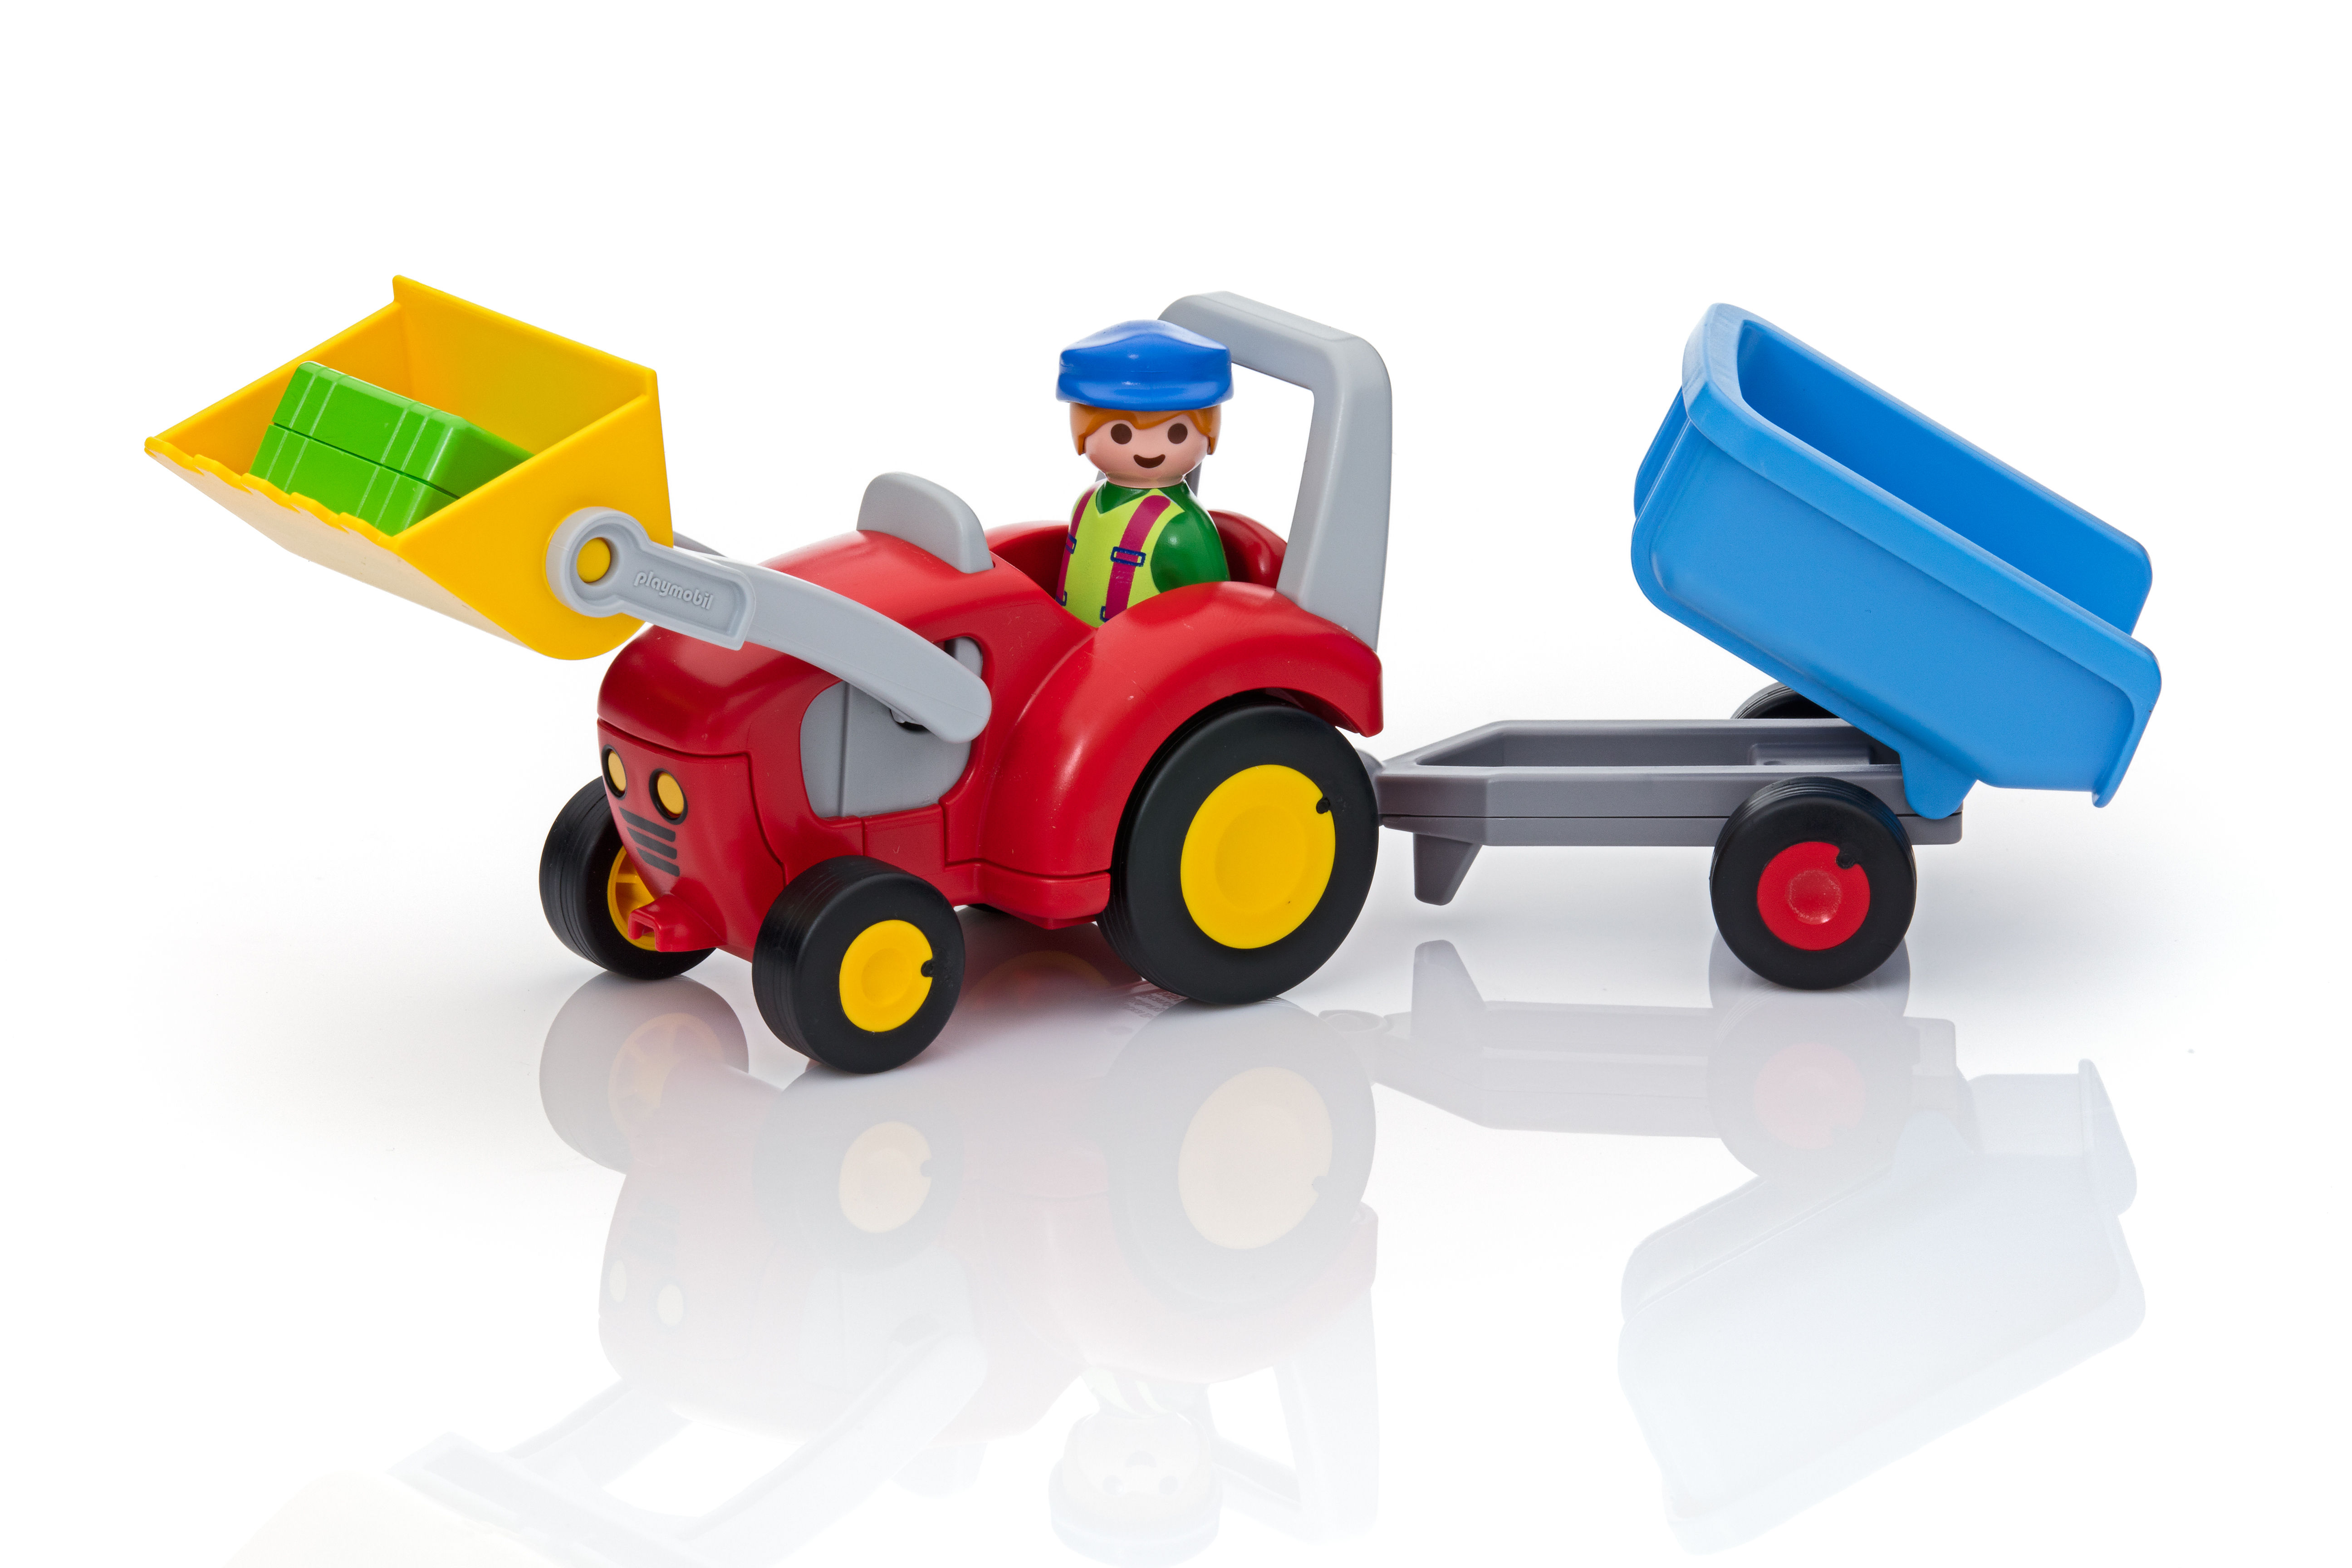 Playmobil Tracteur avec remorque (6964) - acheter chez